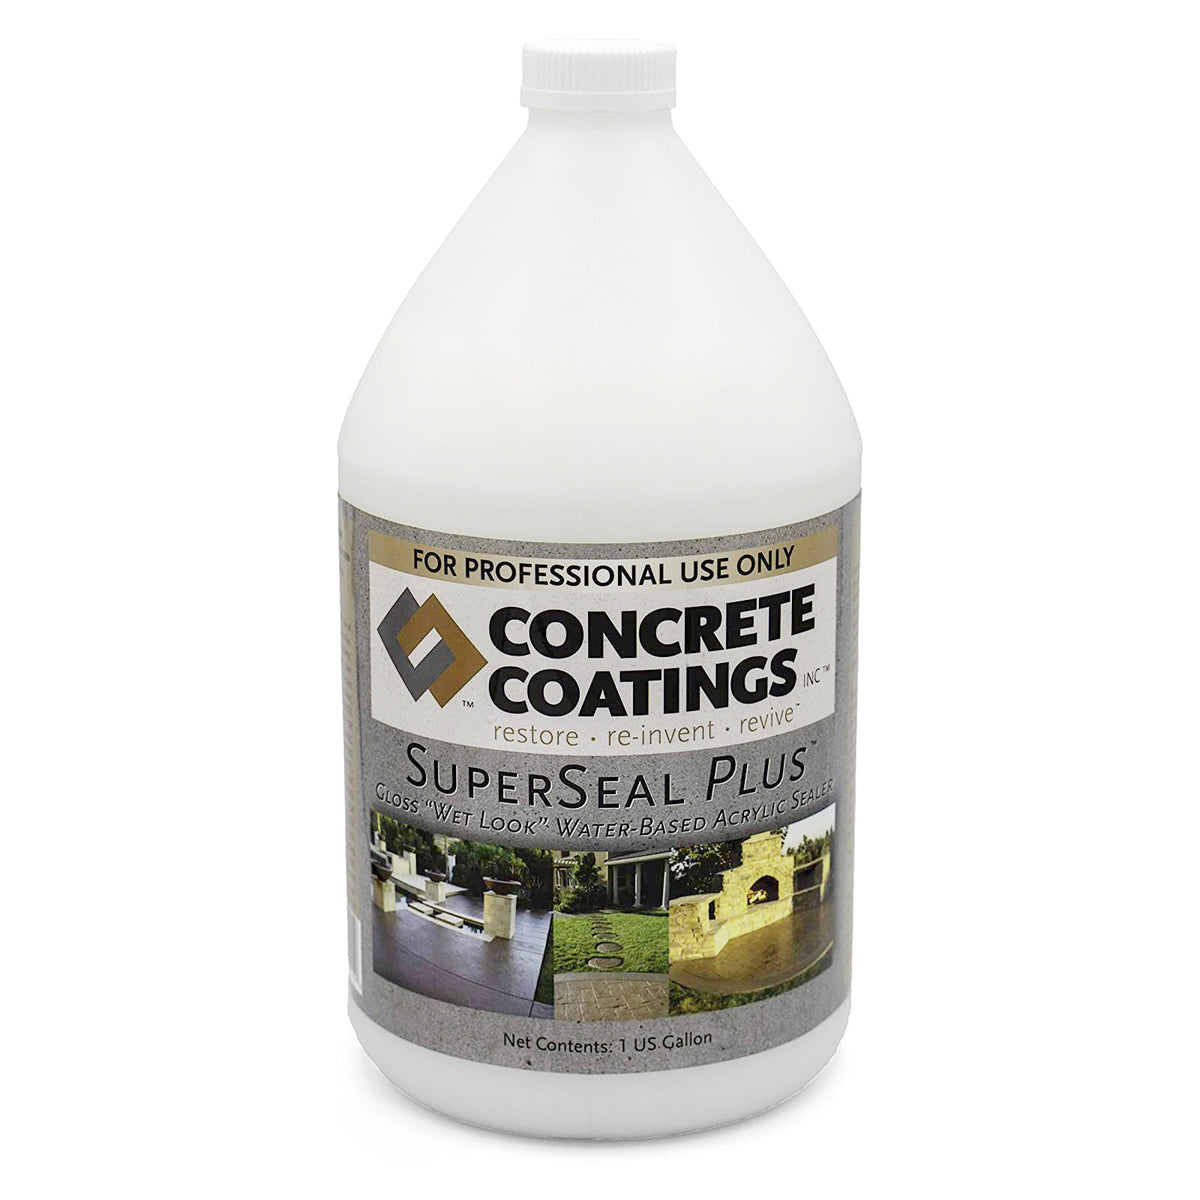 Concrete Floor Supply 's Glu Gone - 1 Gallon Industrial Strength